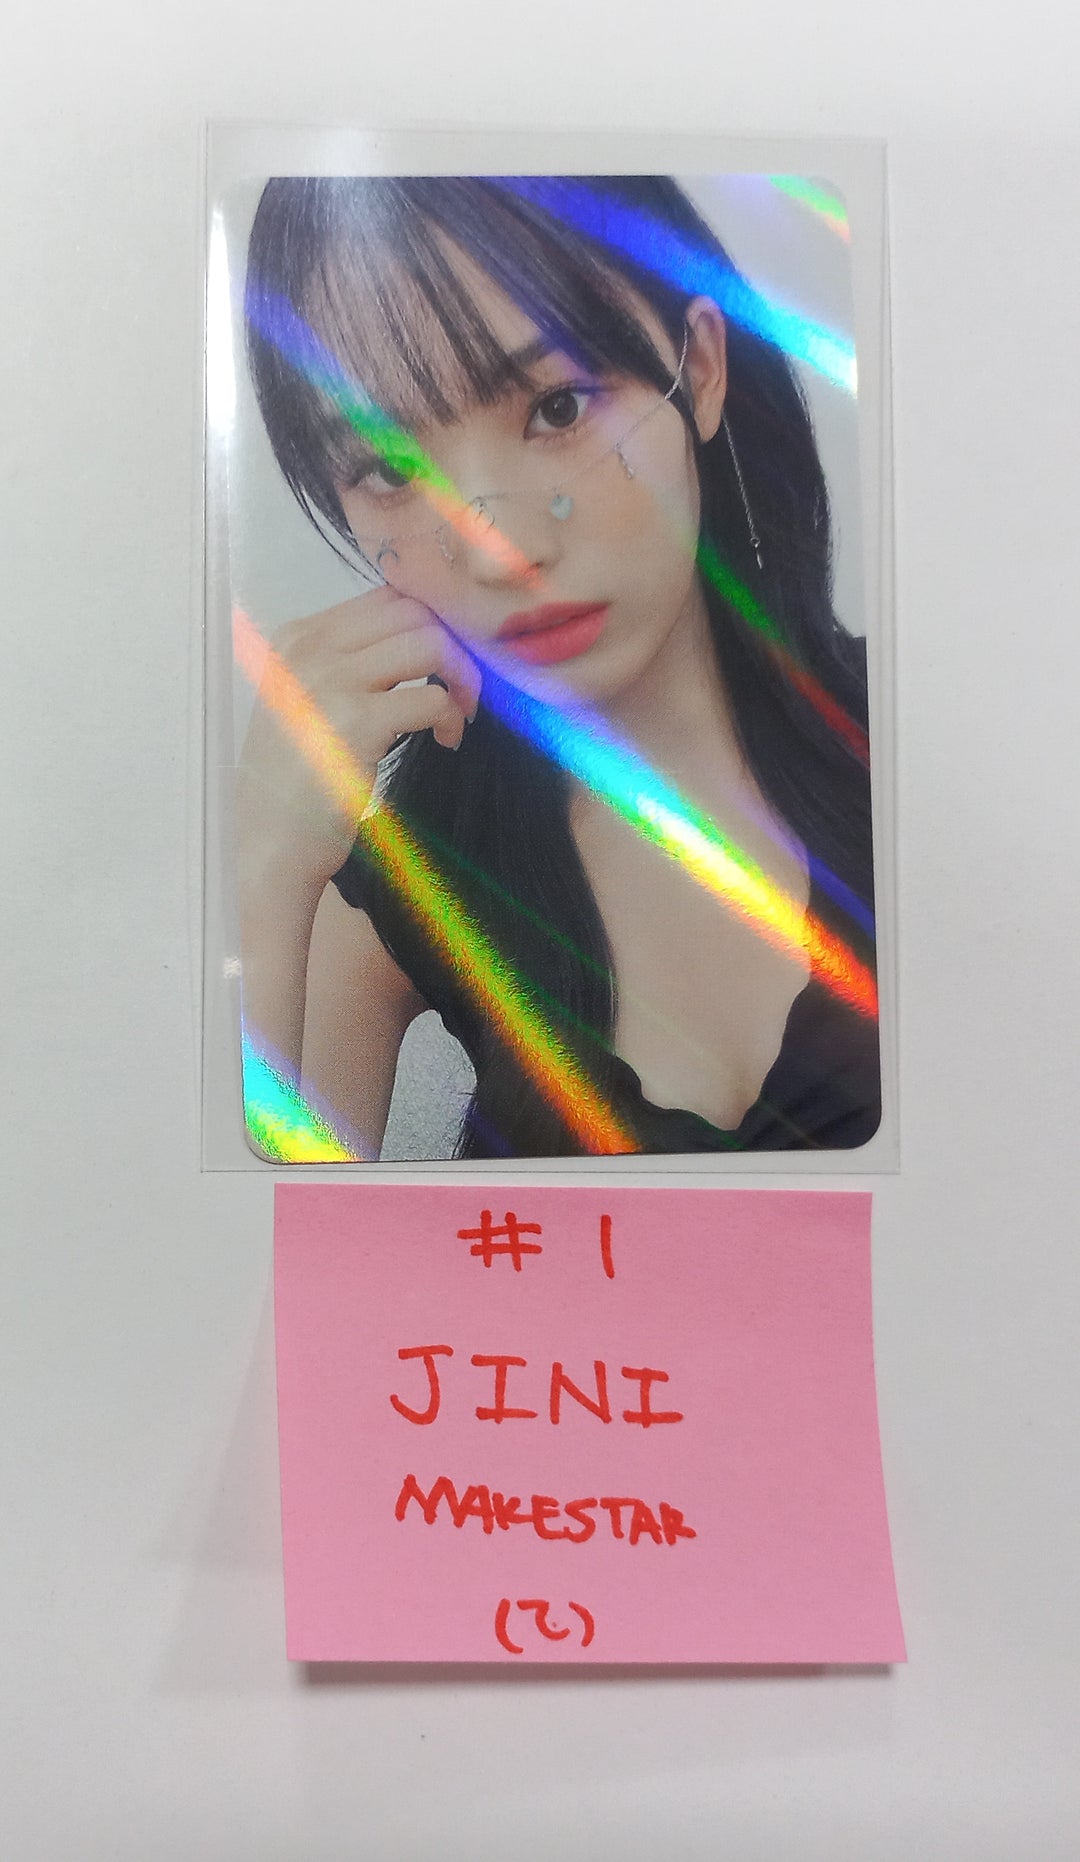 JINI "An Iron Hand In A Velvet Glove" - Makestar Fansign Event Hologram Photocard [23.10.25]